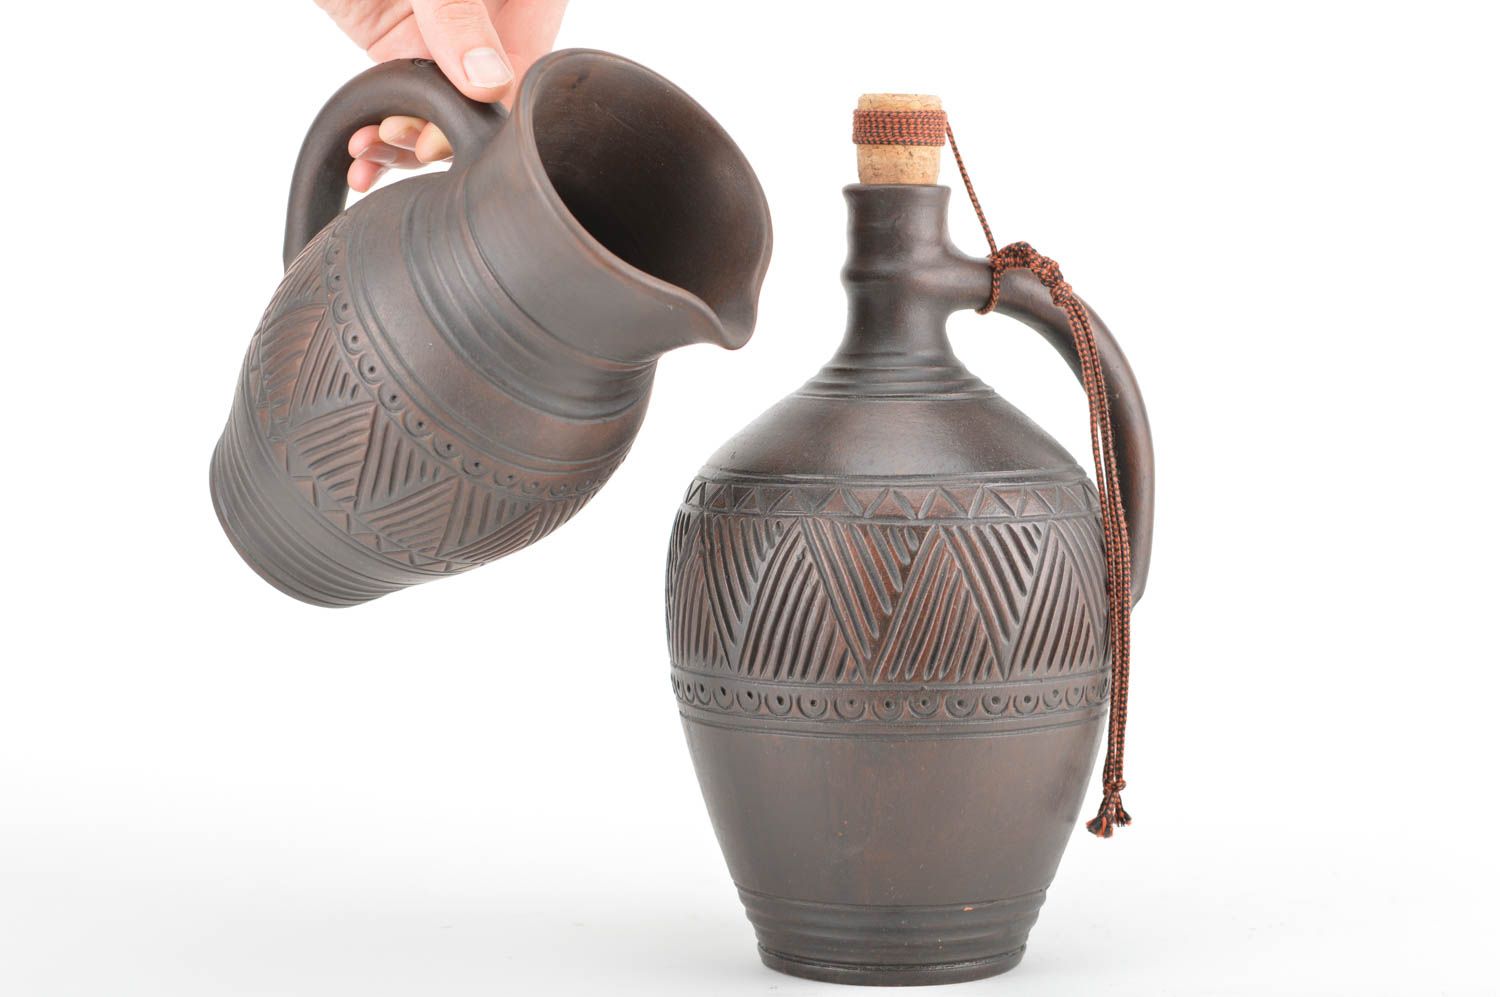 30 oz and 60 oz ceramic wine carafe and jug in dark brown color 5,31 lb  photo 3